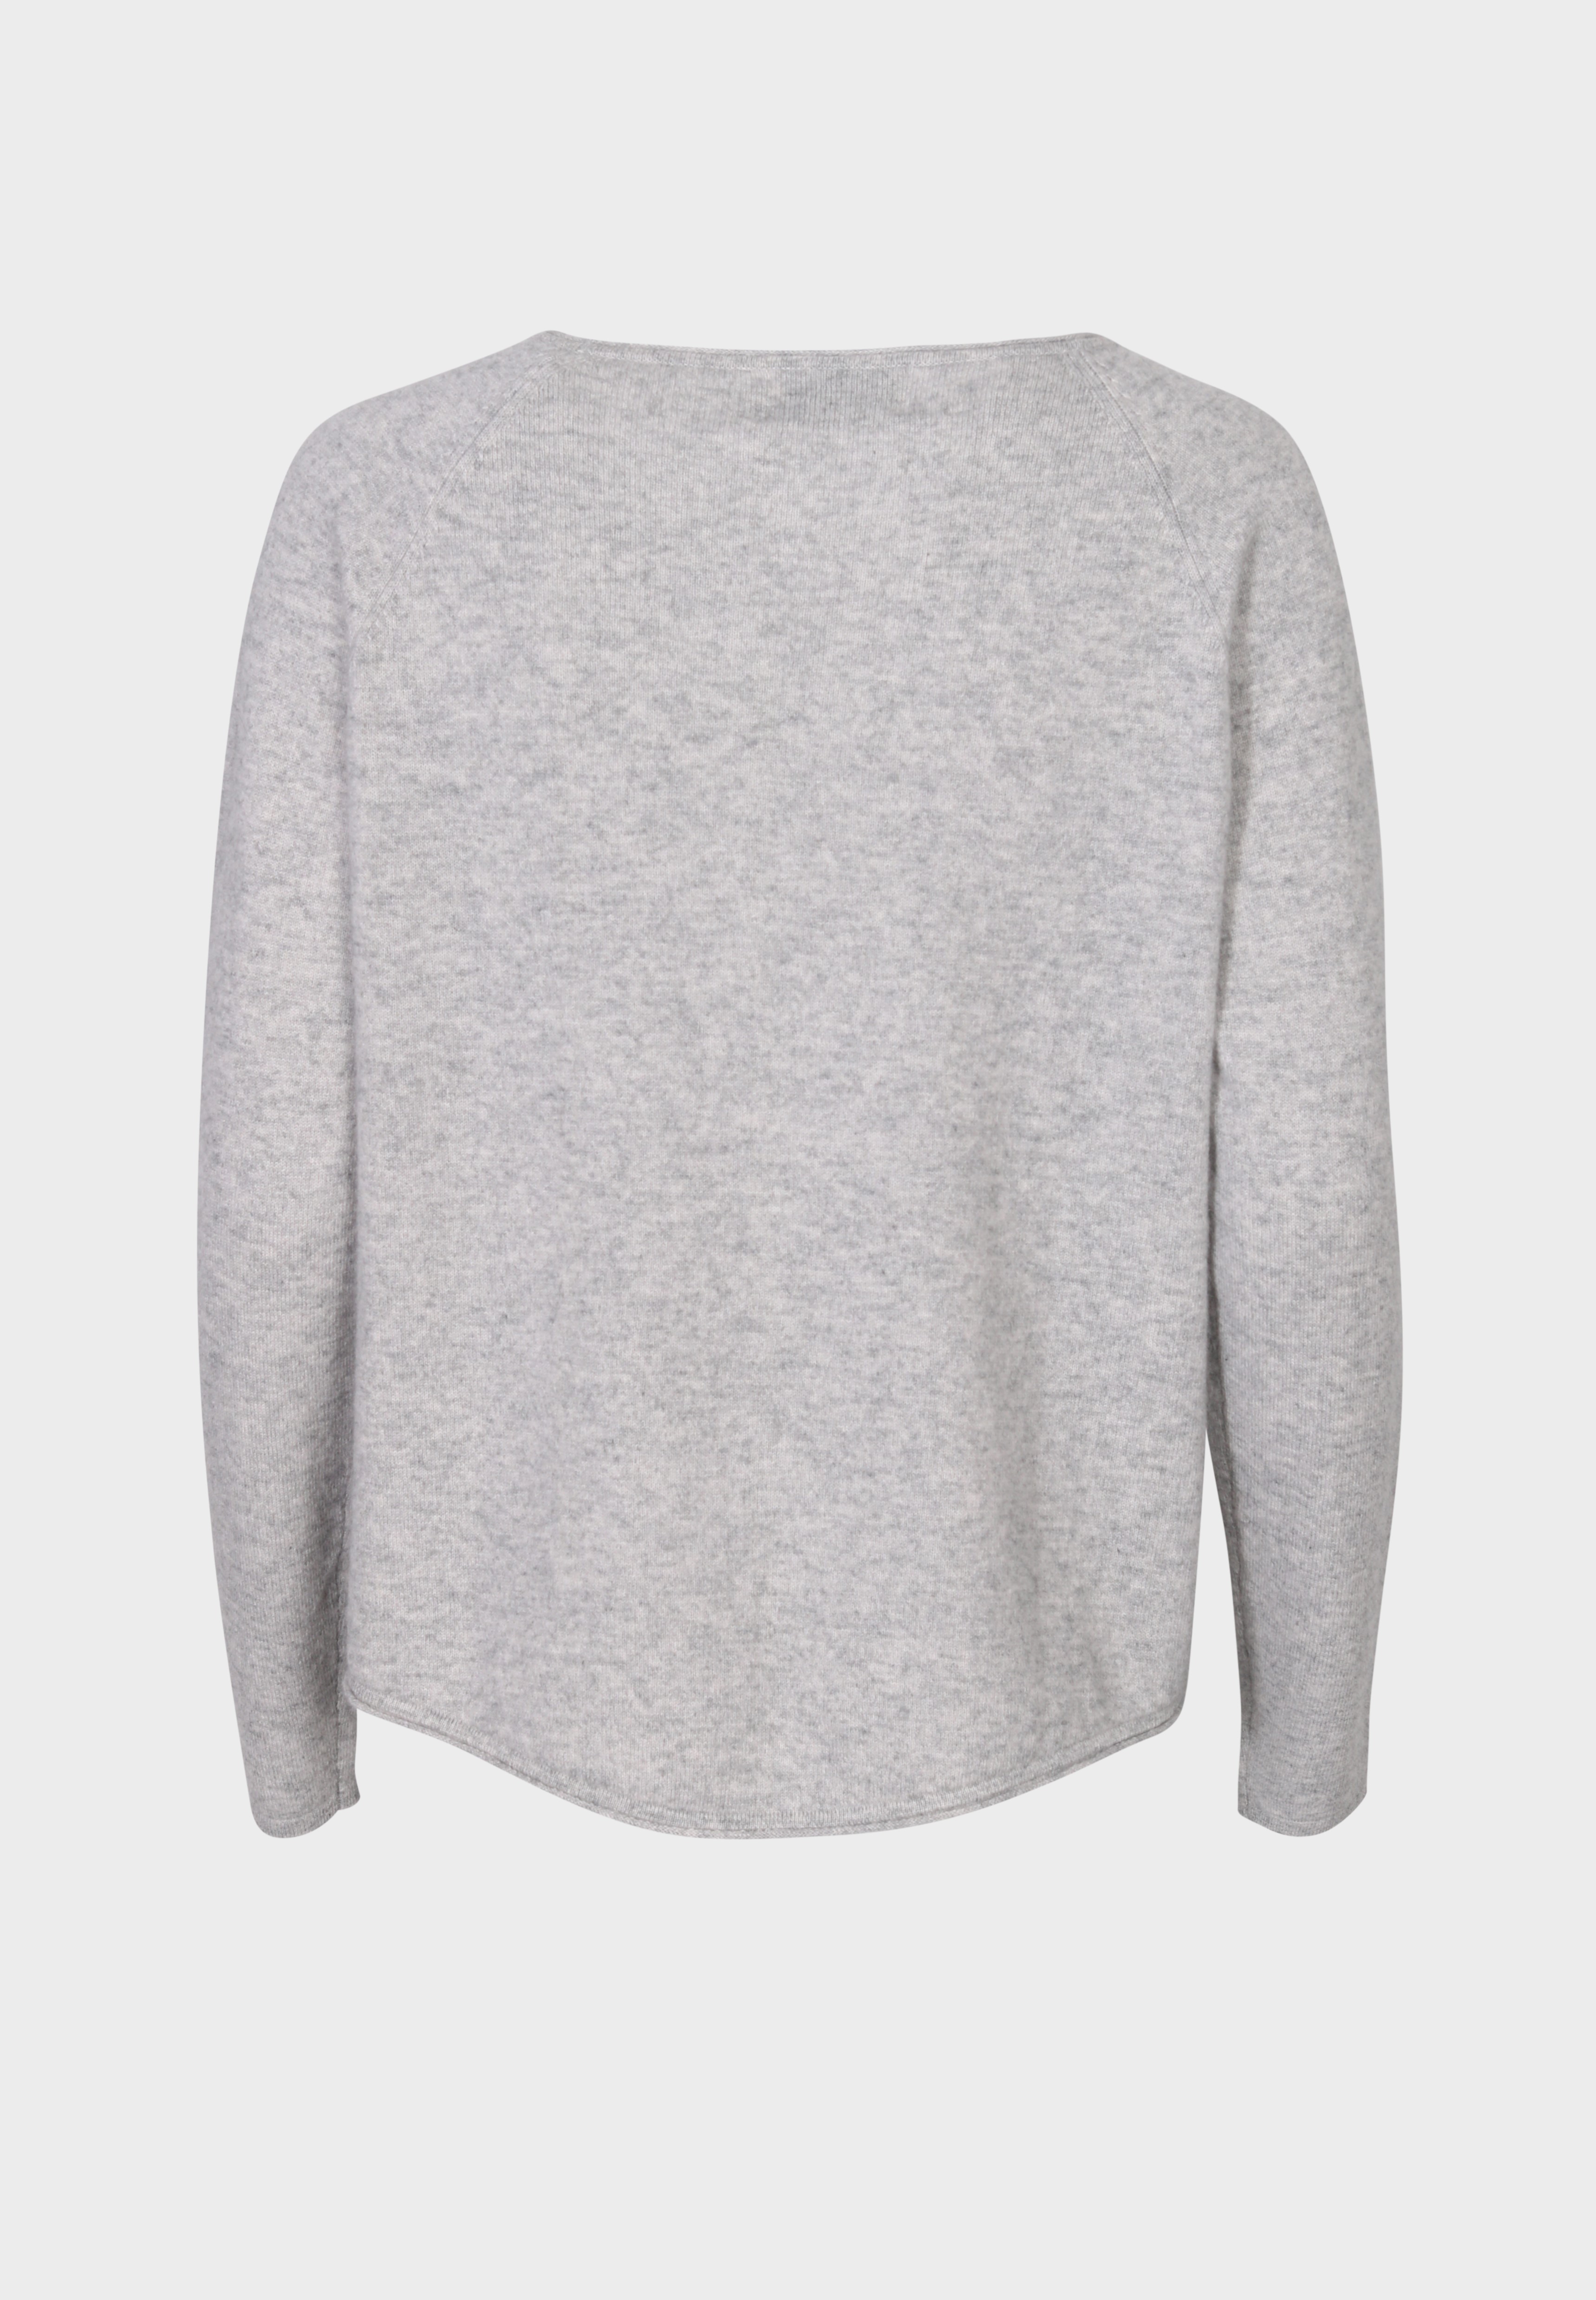 FLONA Cashmere Sweater in Greige L